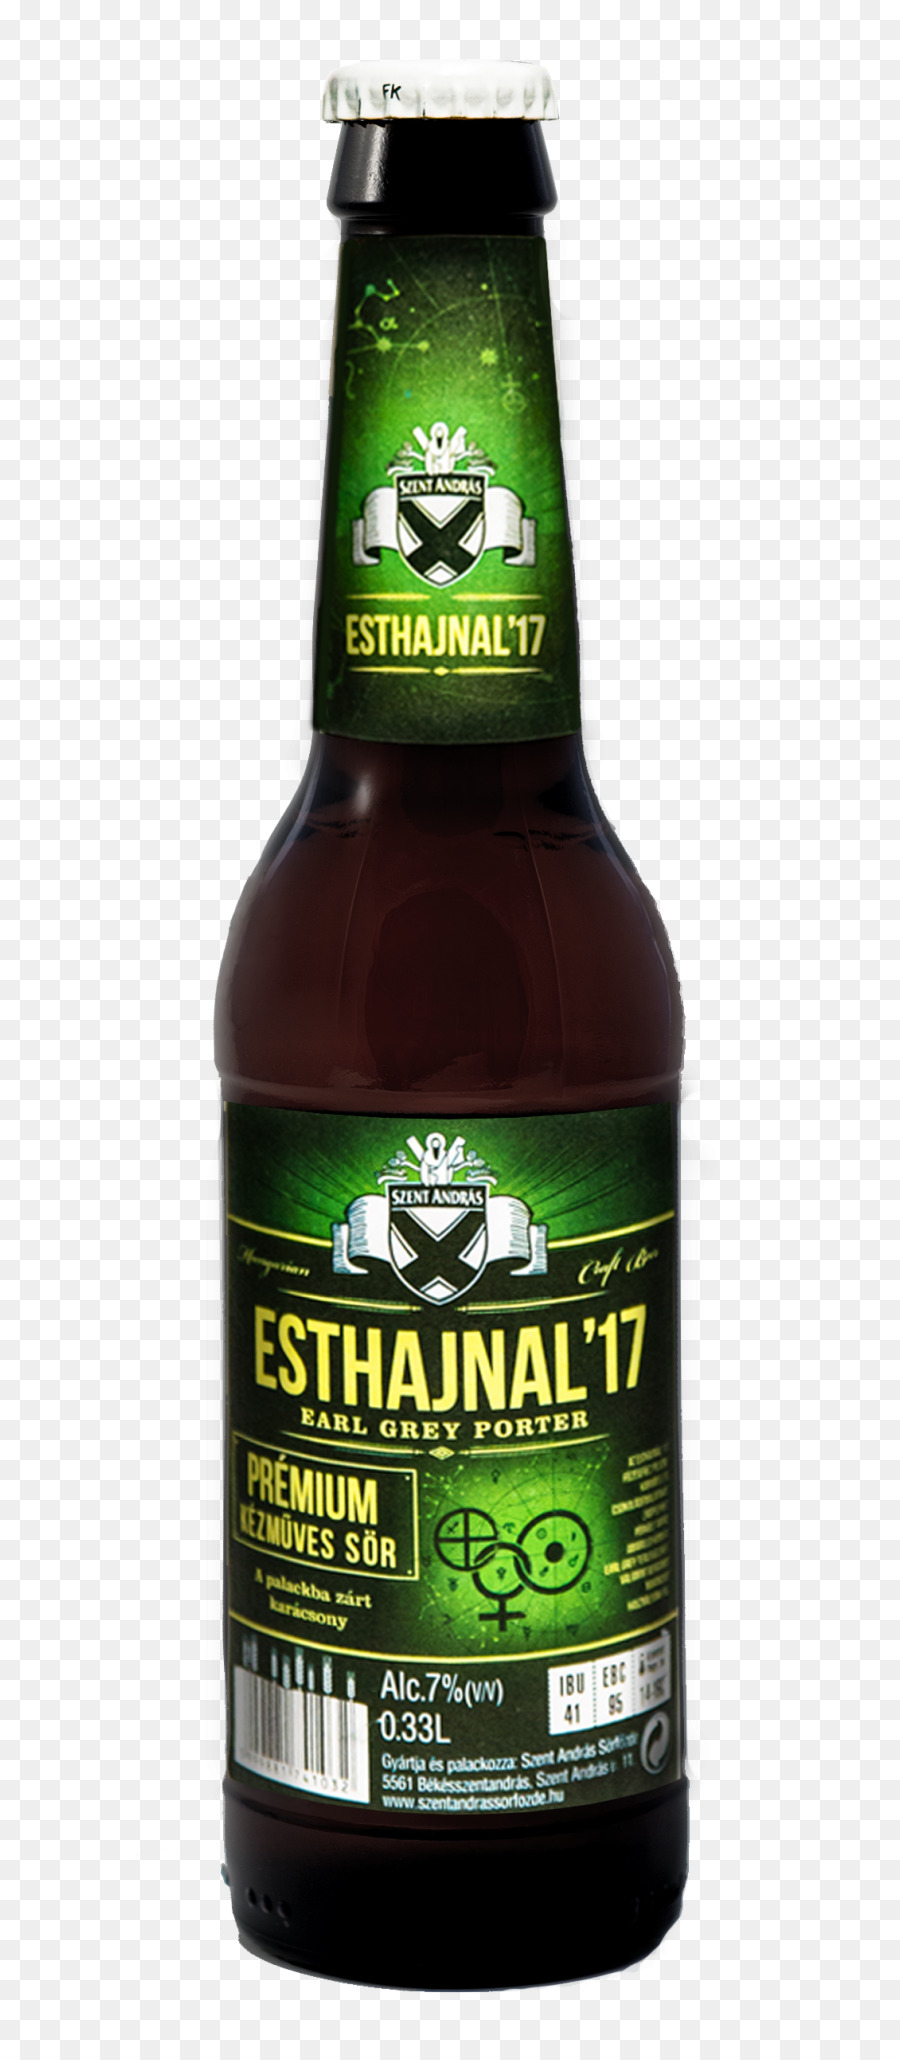 Bierflasche Brauerei Esthajnal Street-Porter - Bier